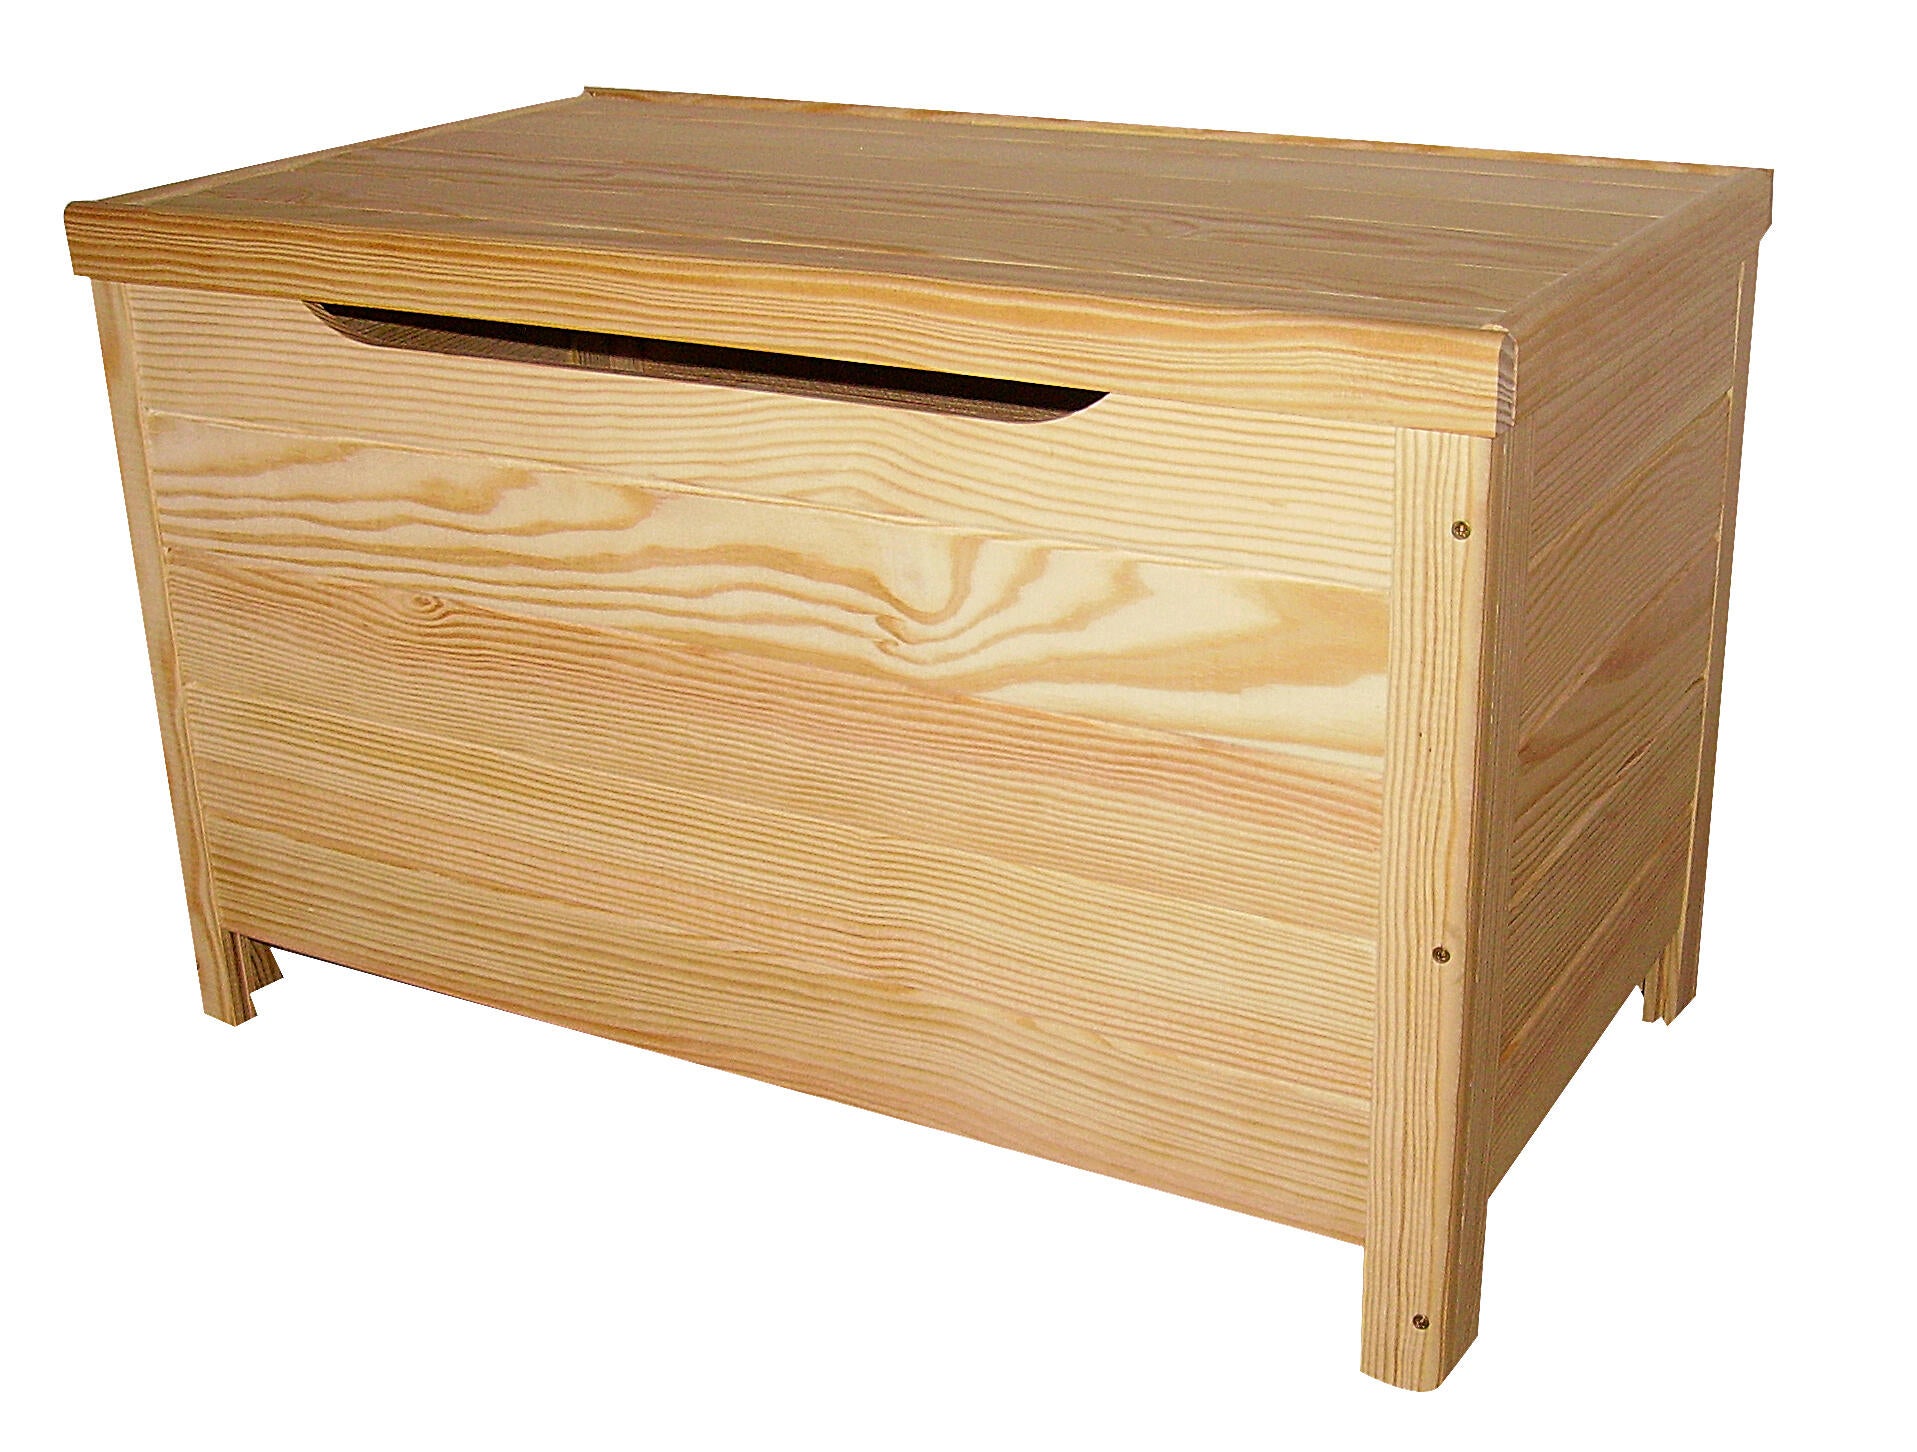 Baúl de madera de 50x80x40 cm y capacidad de 135L